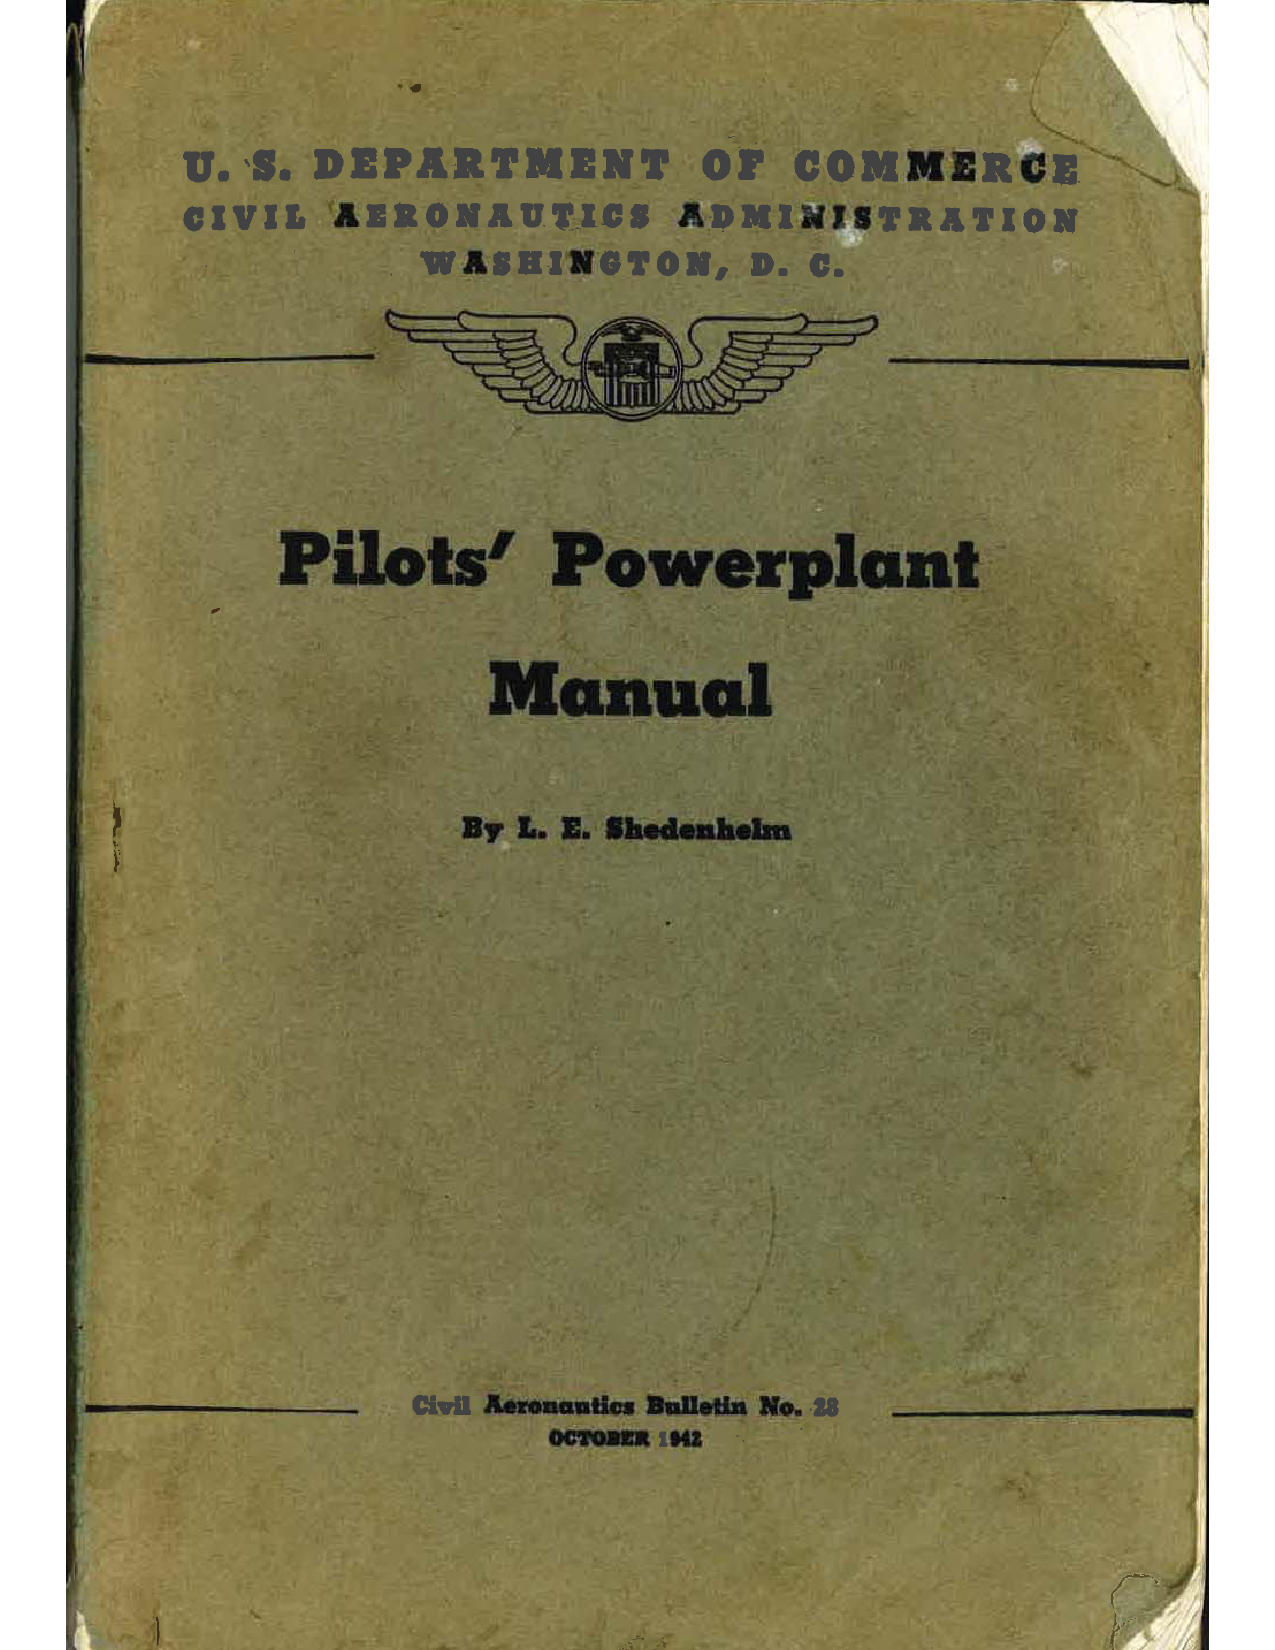 Sample page 1 from AirCorps Library document: Pilot's Powerplant Manual - Civil Aeronautics